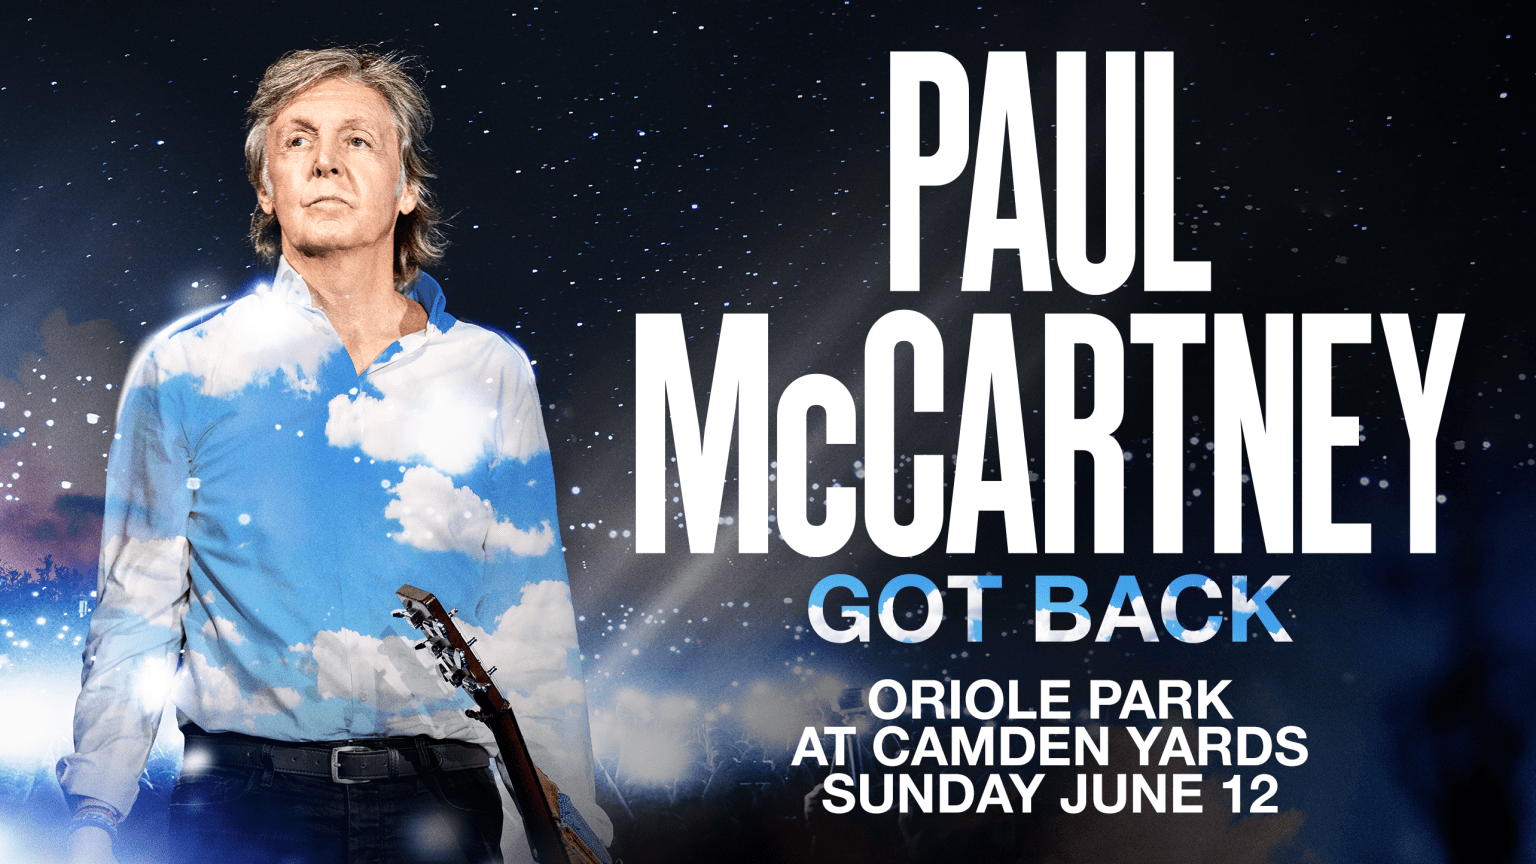 Paul McCartney “Got Back” Tour – Sunday, June 12, 2022